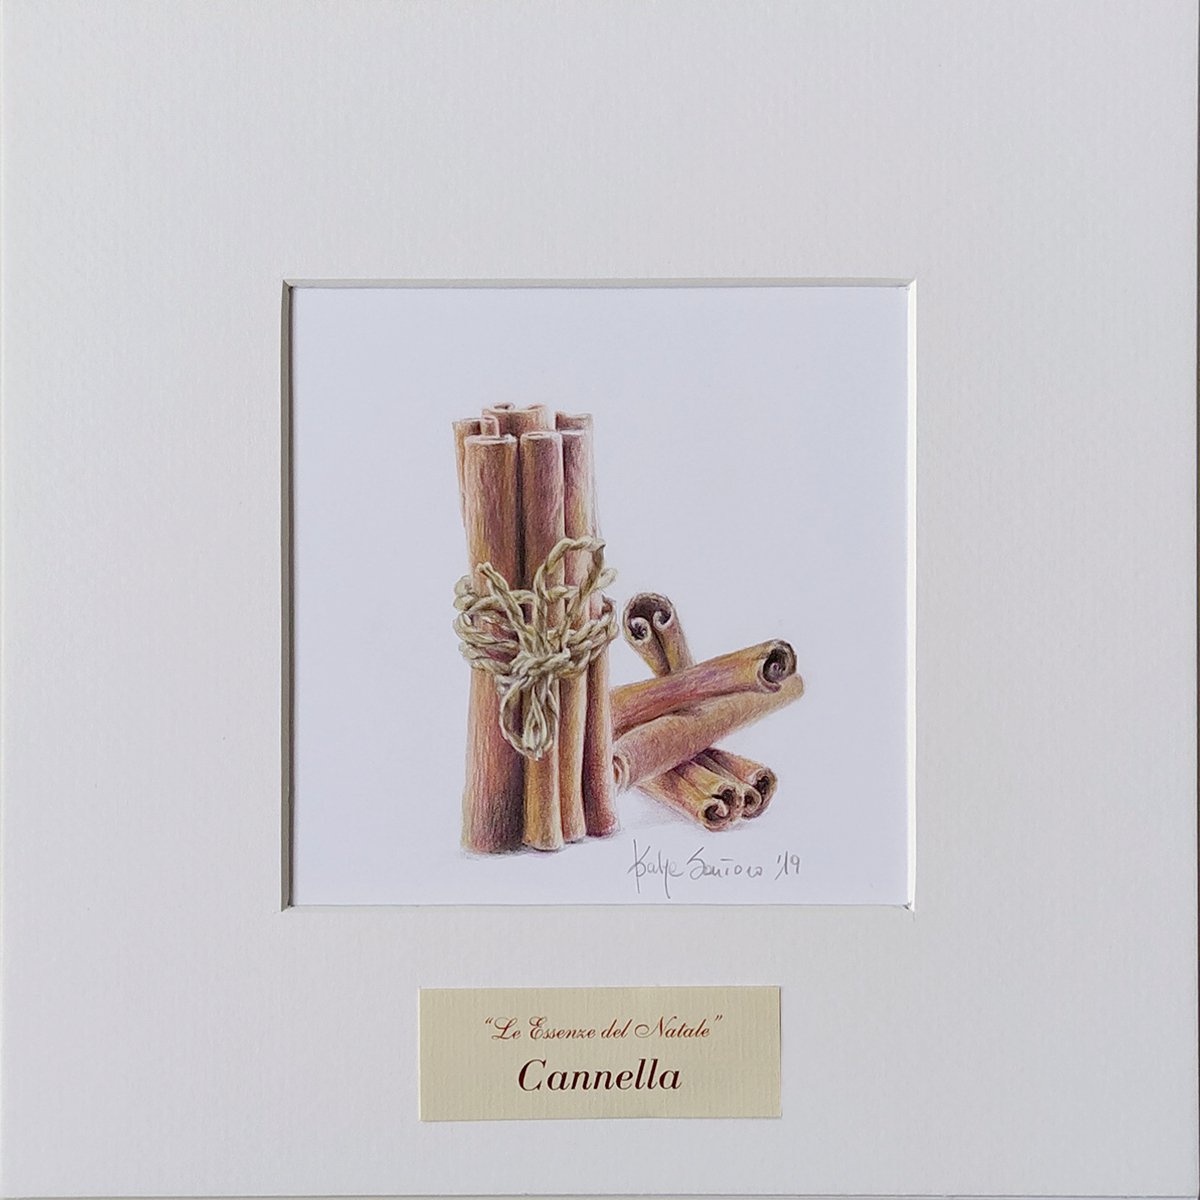 Cannella (Cinnamon)* by Katya Santoro